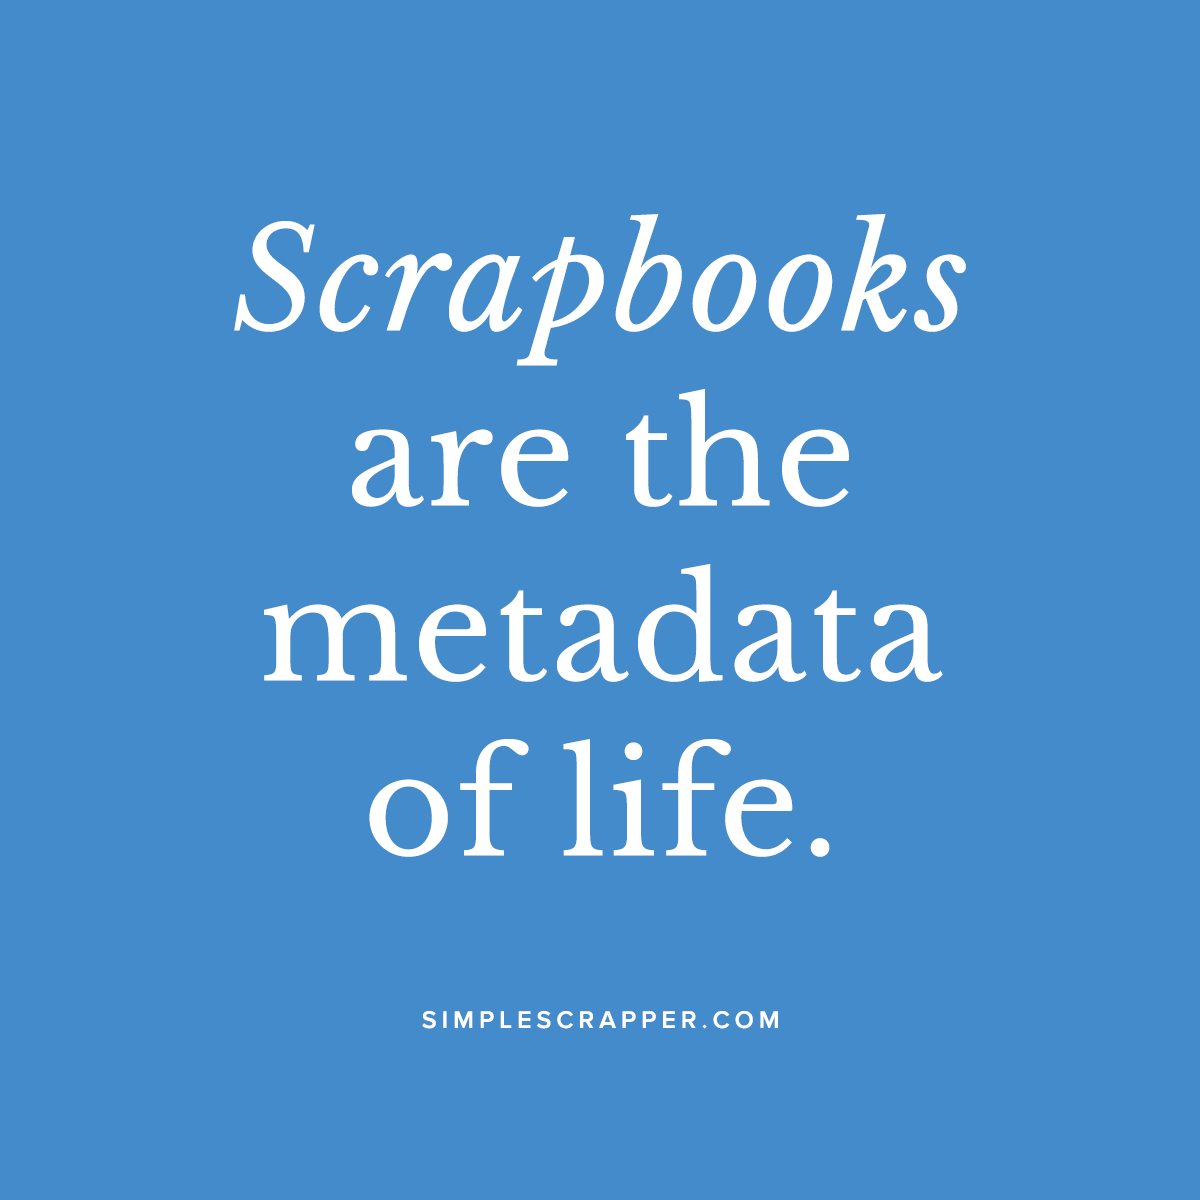 Scrapbooks are the metadata of life.